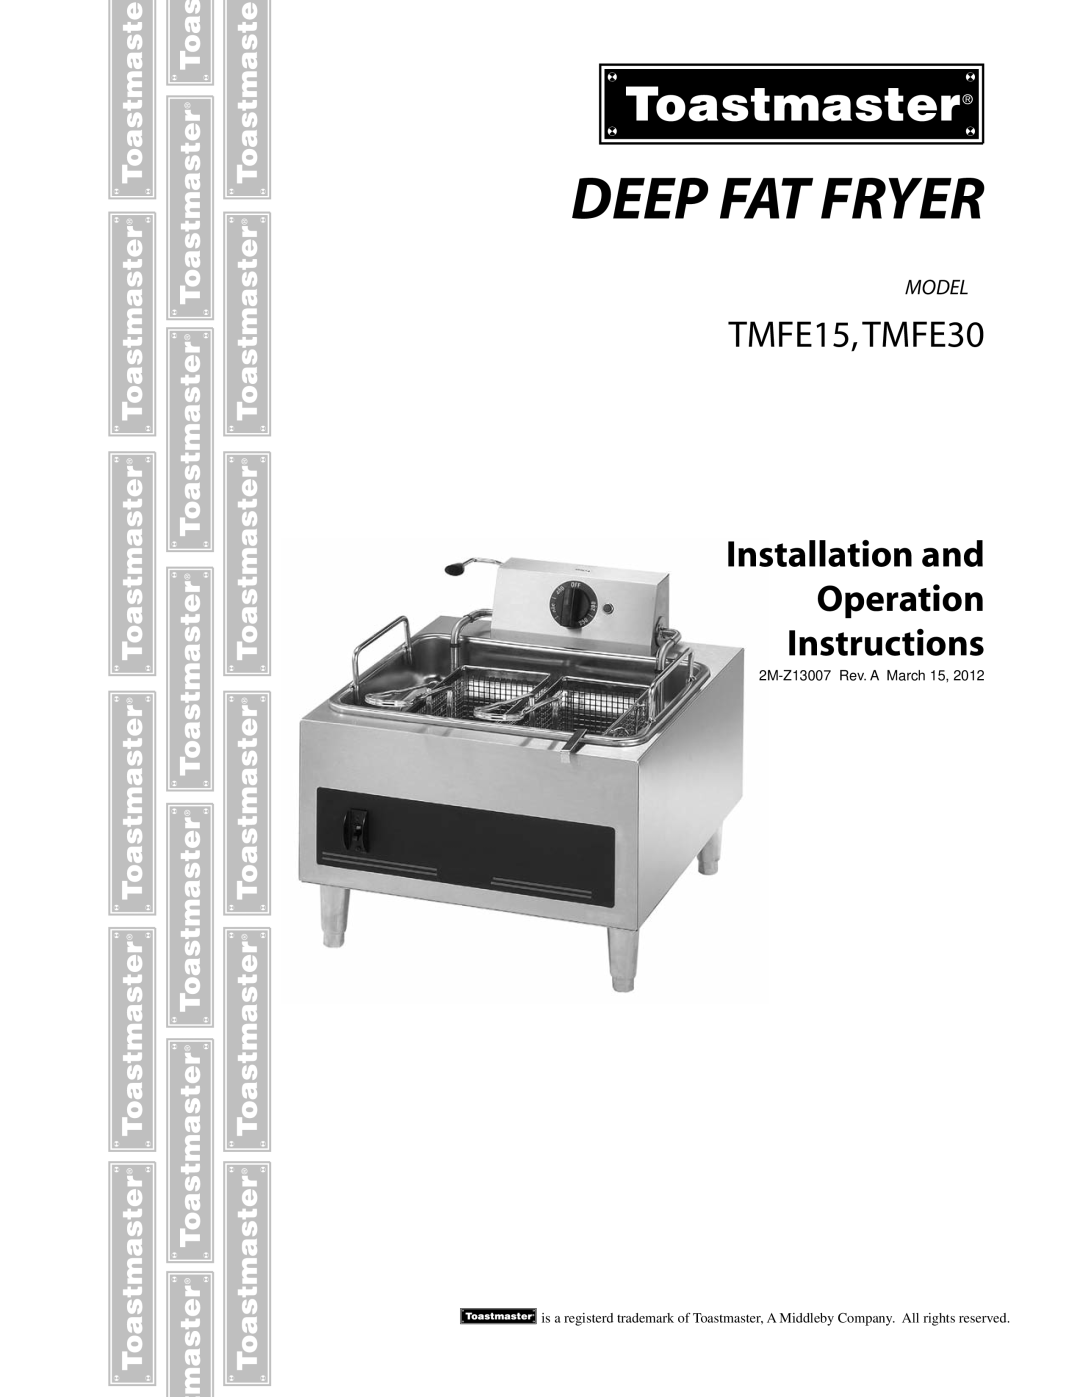 Toastmaster manual Deep Fat Fryer, TMFE15, TMFE30, Installation and Operation Instructions, Model 